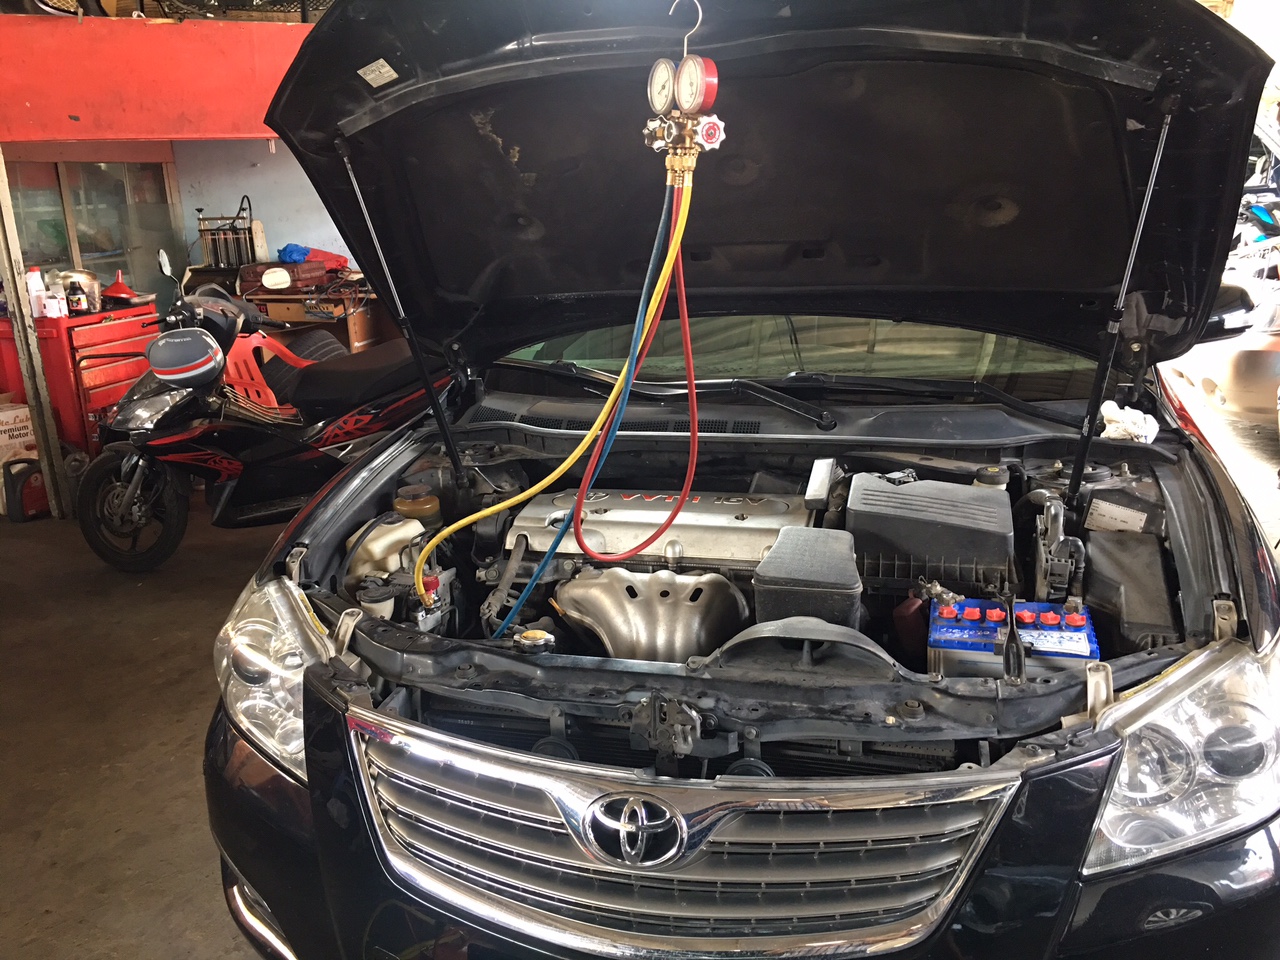 Garage chuyên sửa chữa xe ô tô